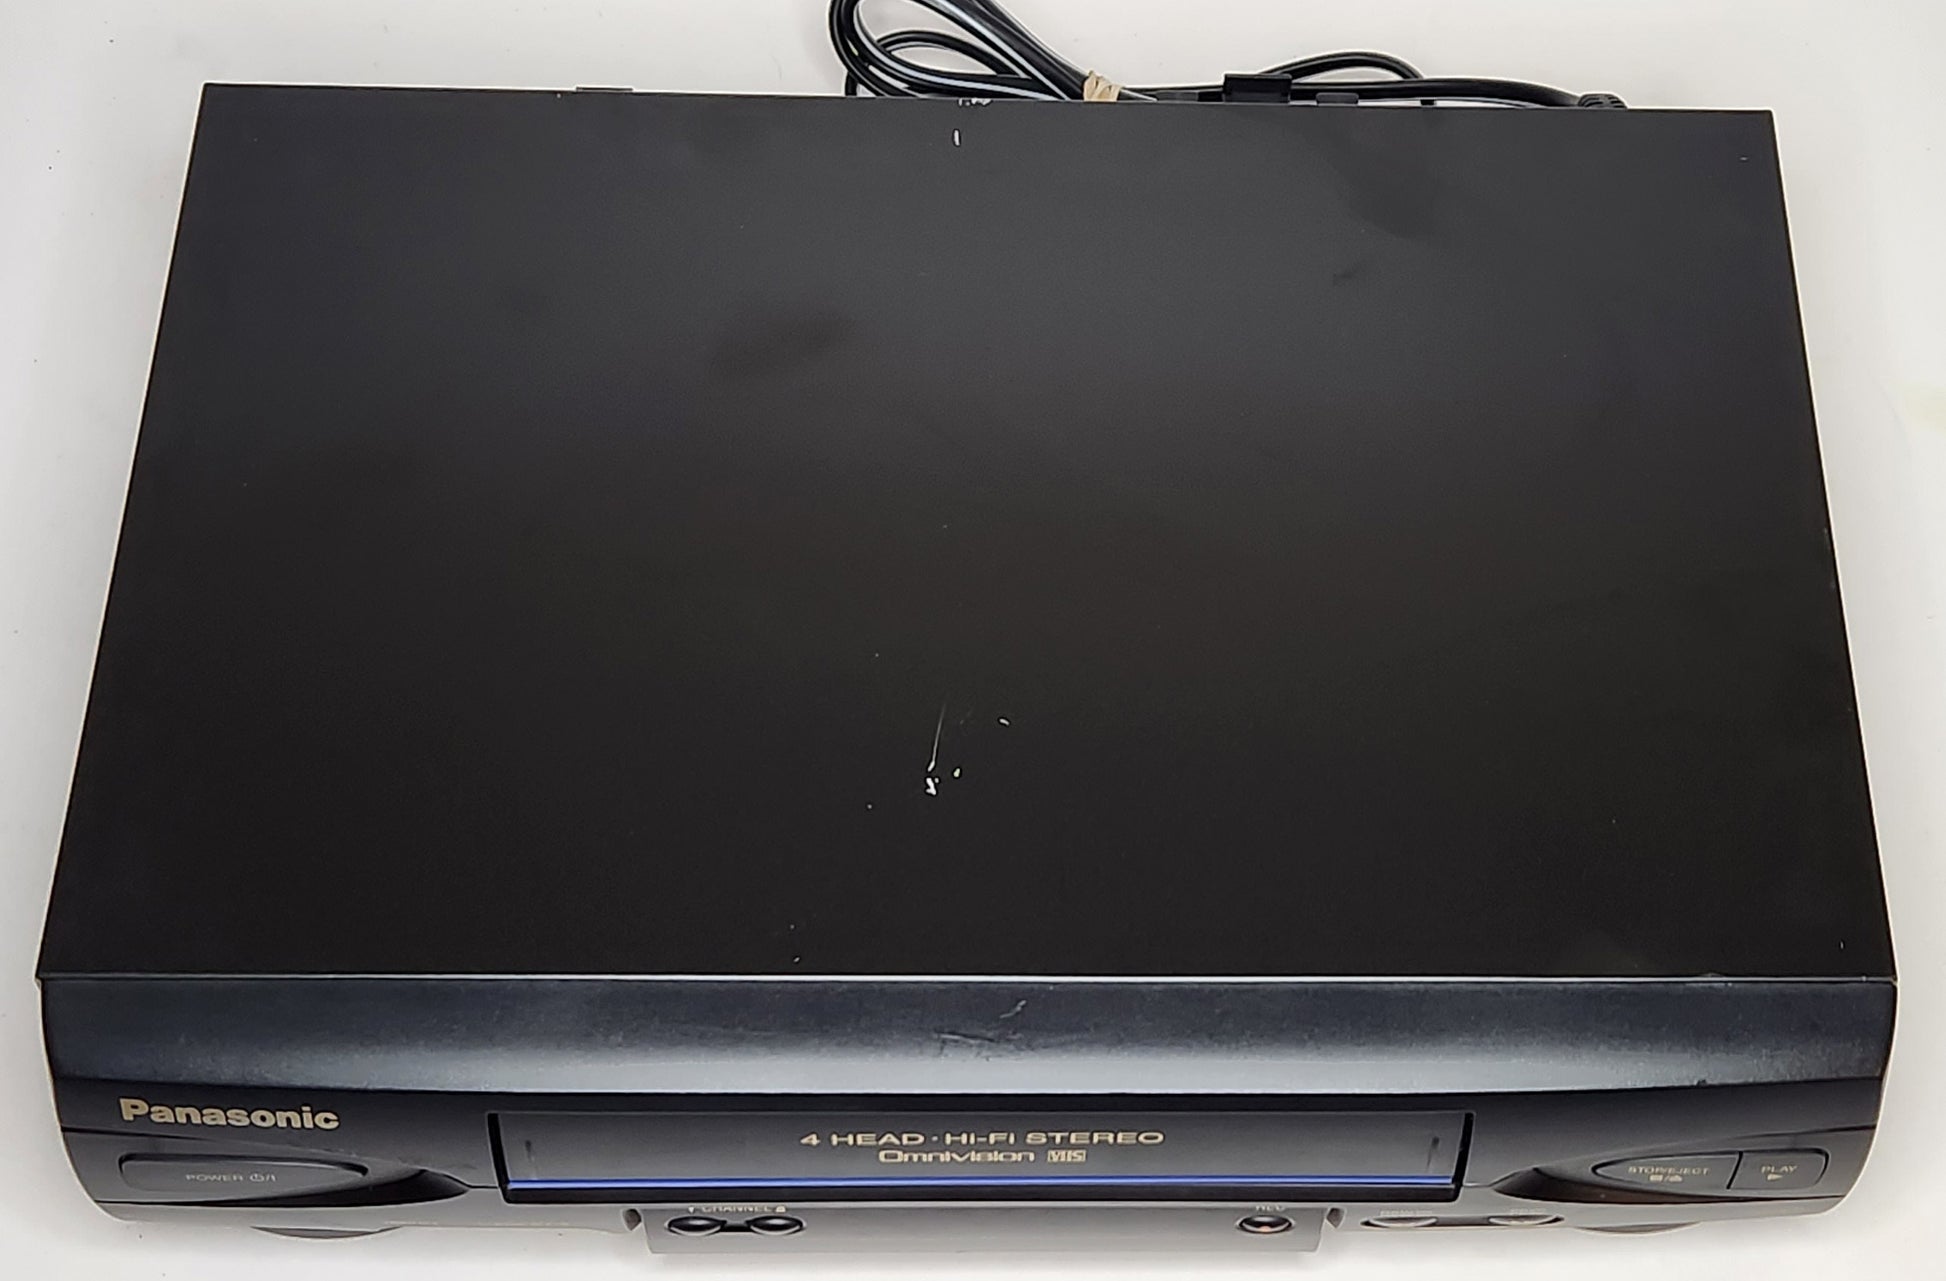 Panasonic PV-V4522 Omnivision VCR, 4-Head Hi-Fi Stereo - Top